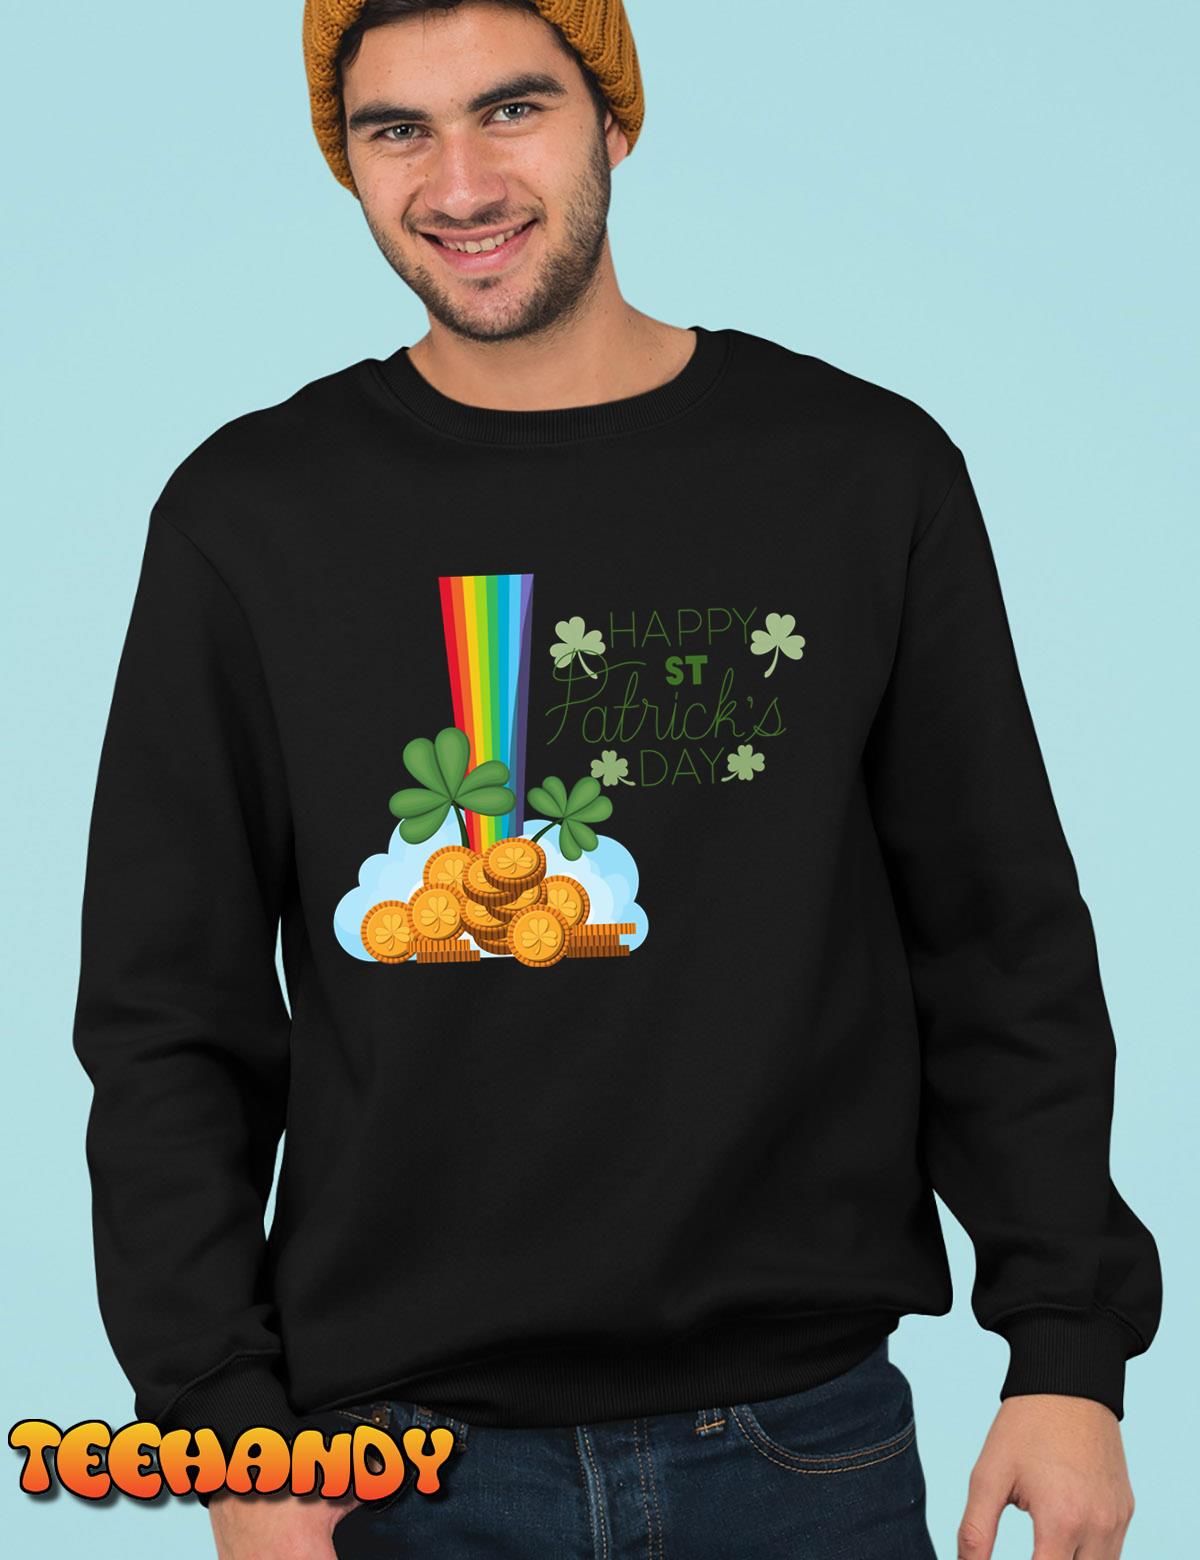 St Patrick’s Day Vintage Design T-Shirt